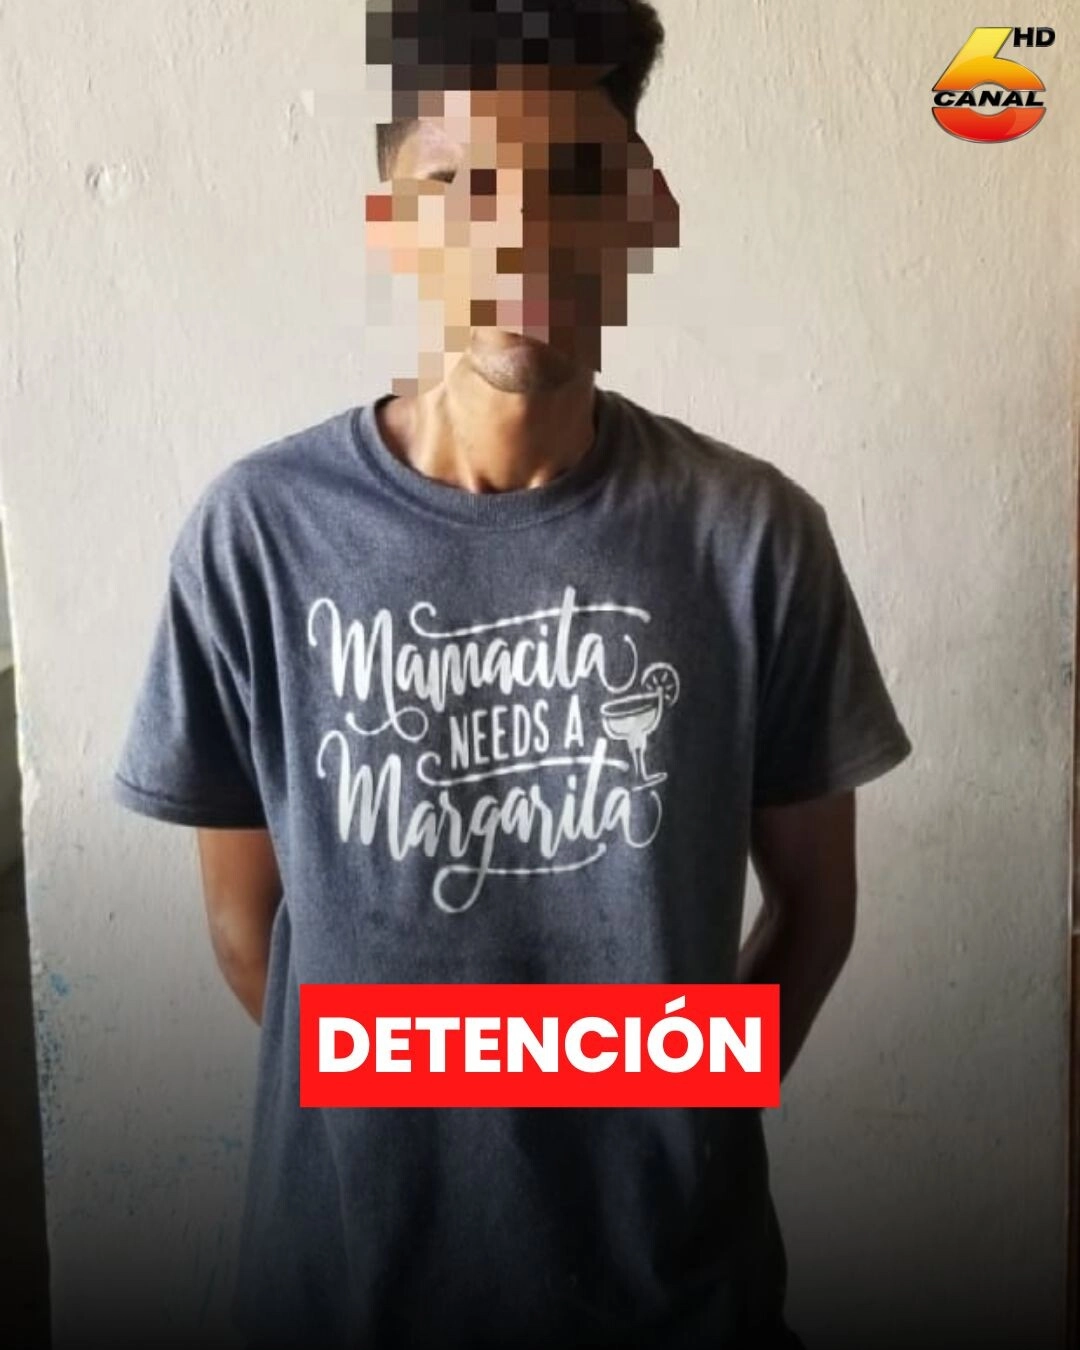 UMEP-19 captura a sujeto por atroz episodio de maltrato familiar en Trujillo